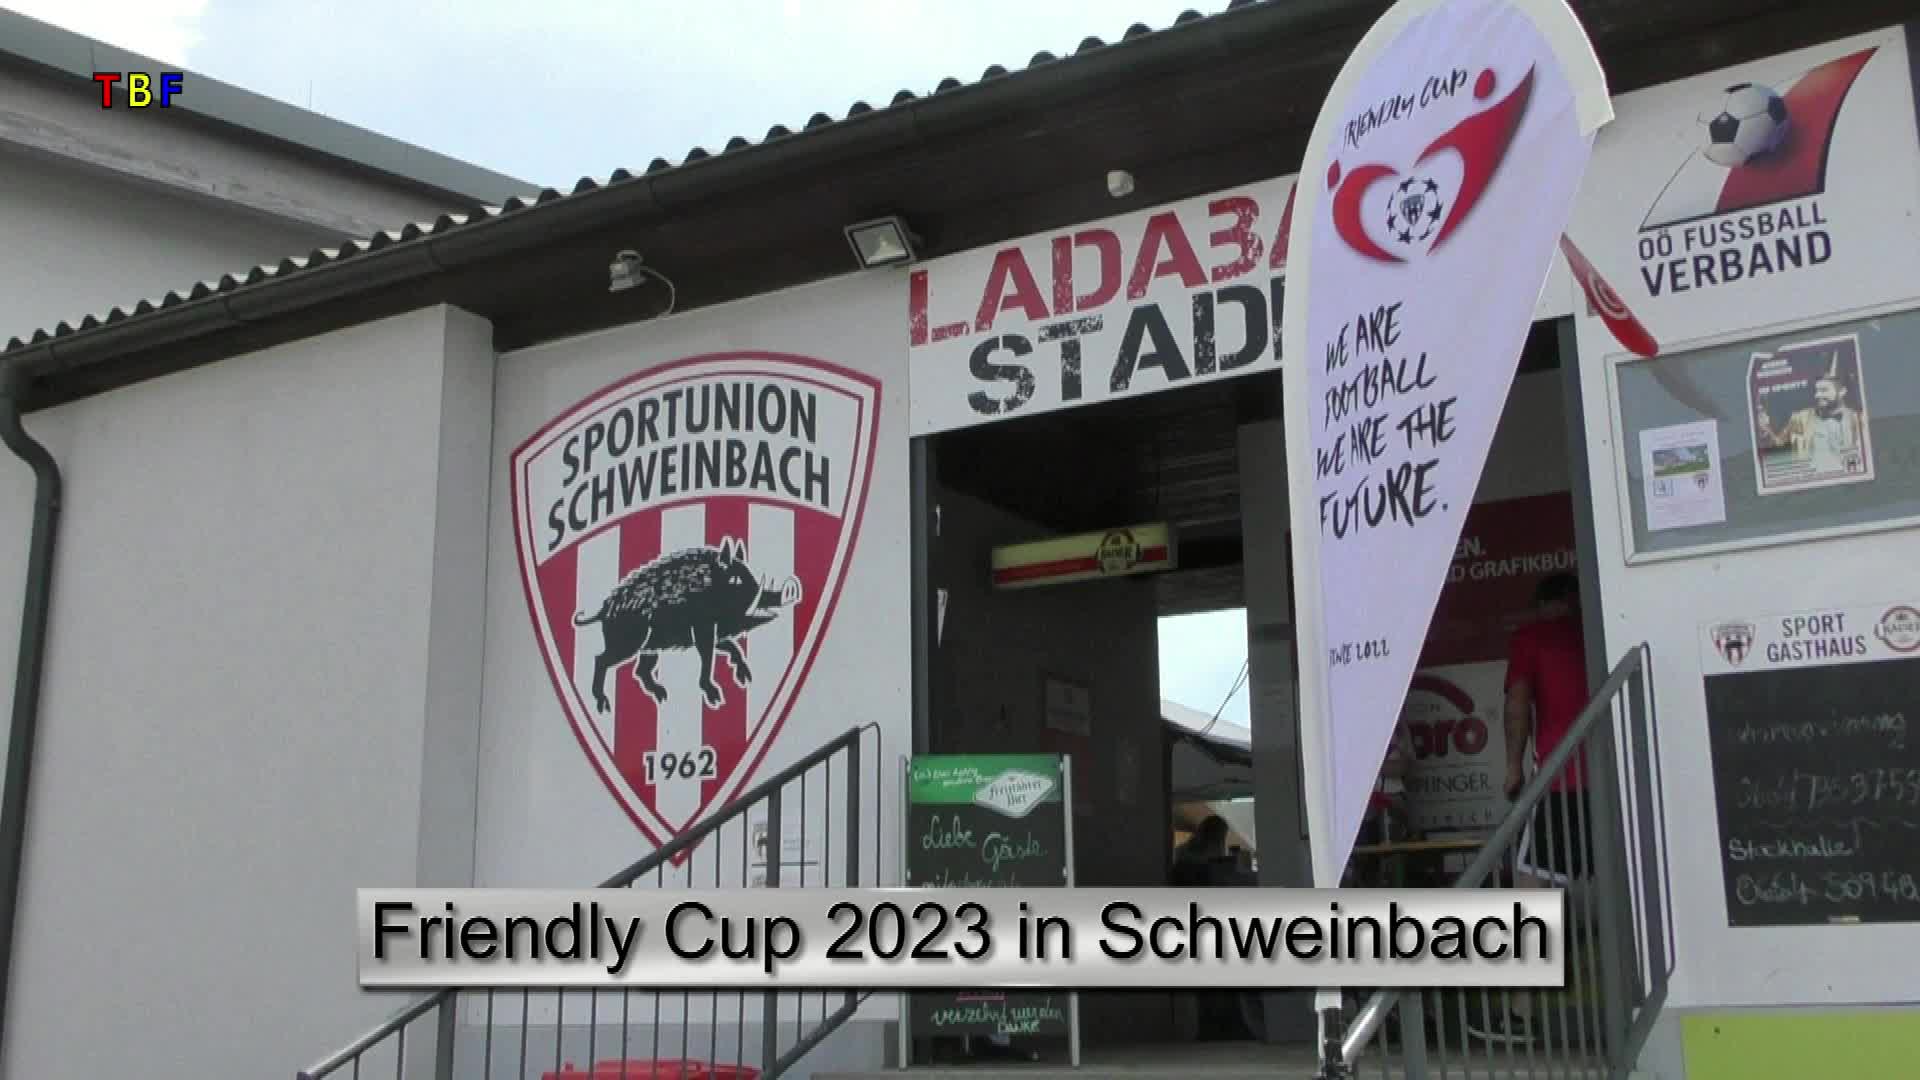 Friendly Cup 2023 in Schweinbach